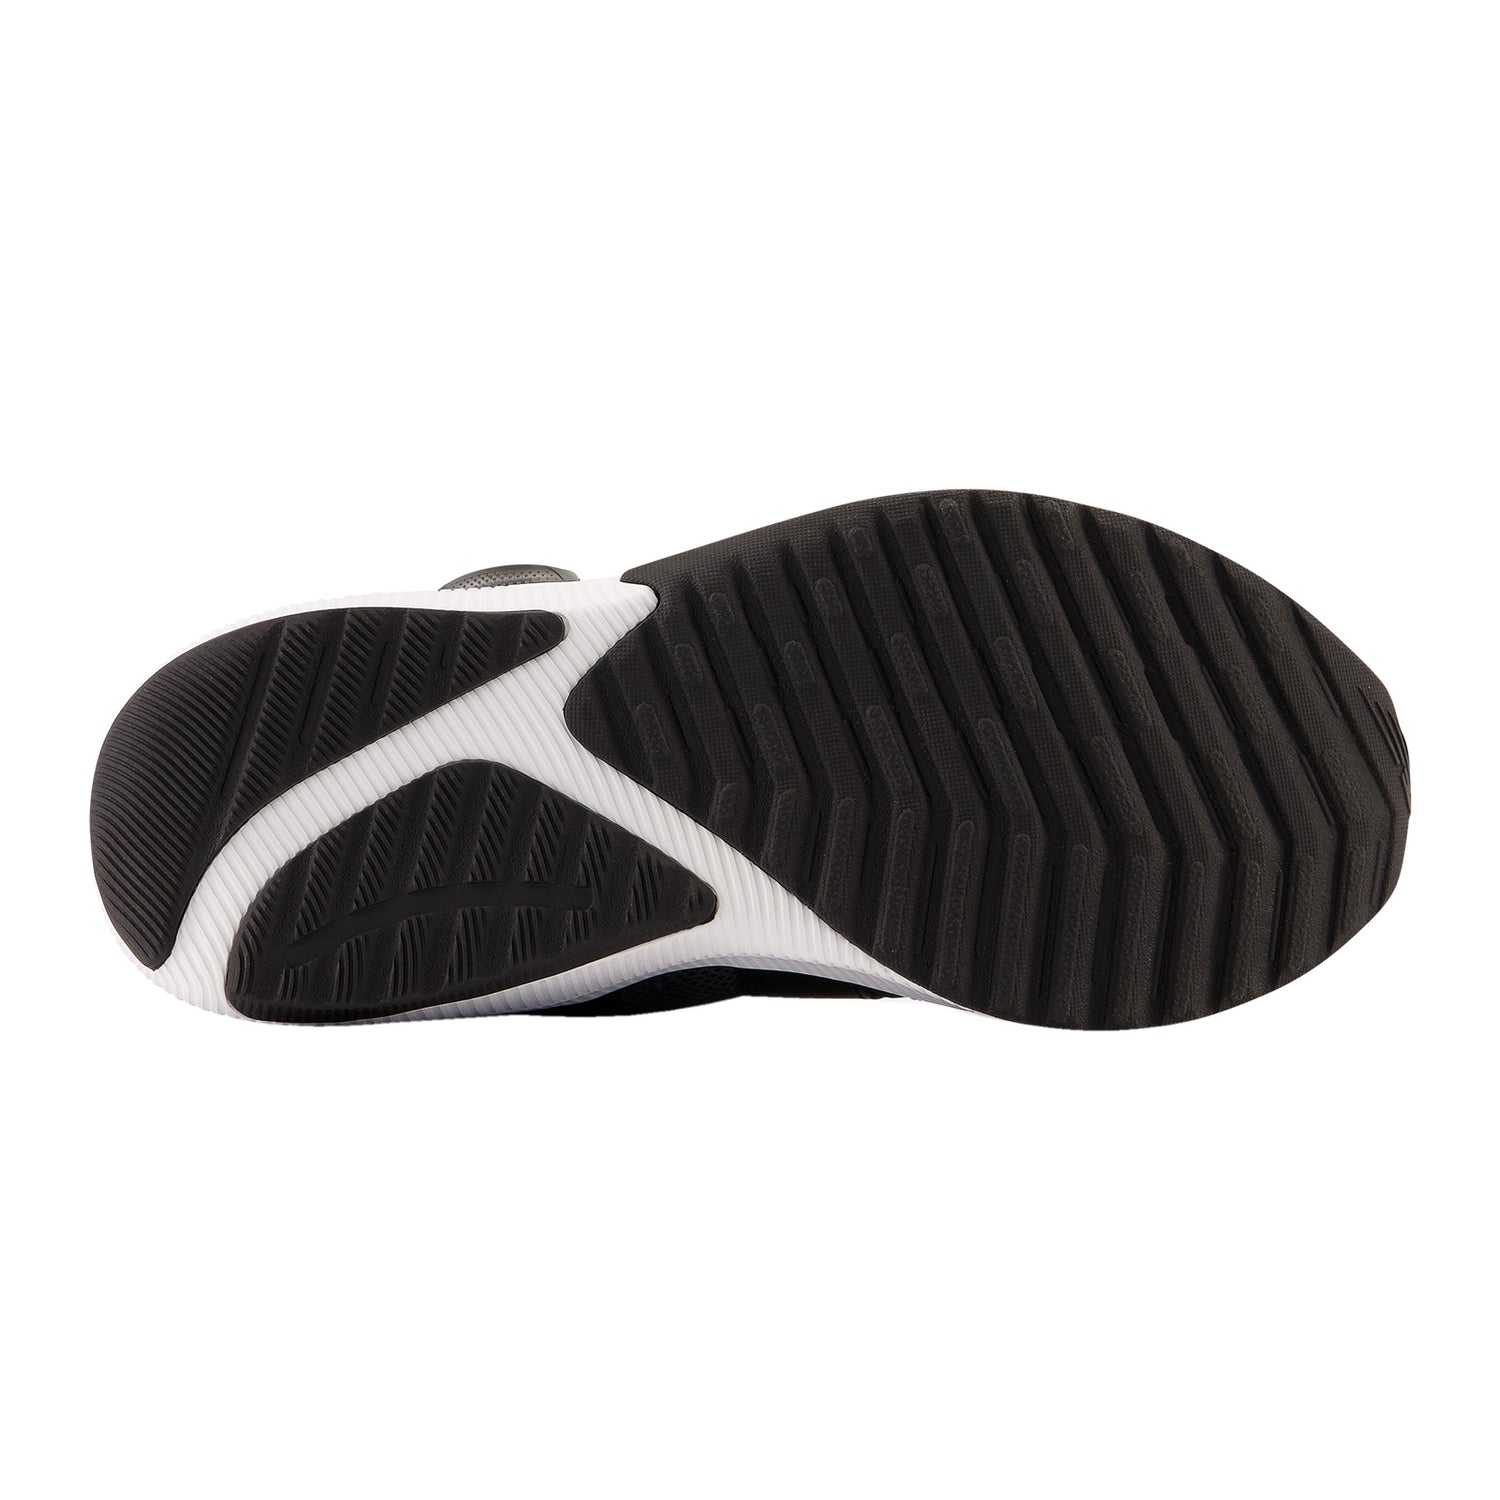 Peltz Shoes  Boy's New Balance Fuel Core Reveal v4 Sneaker - Little Kid Black/White PTRVLBK4